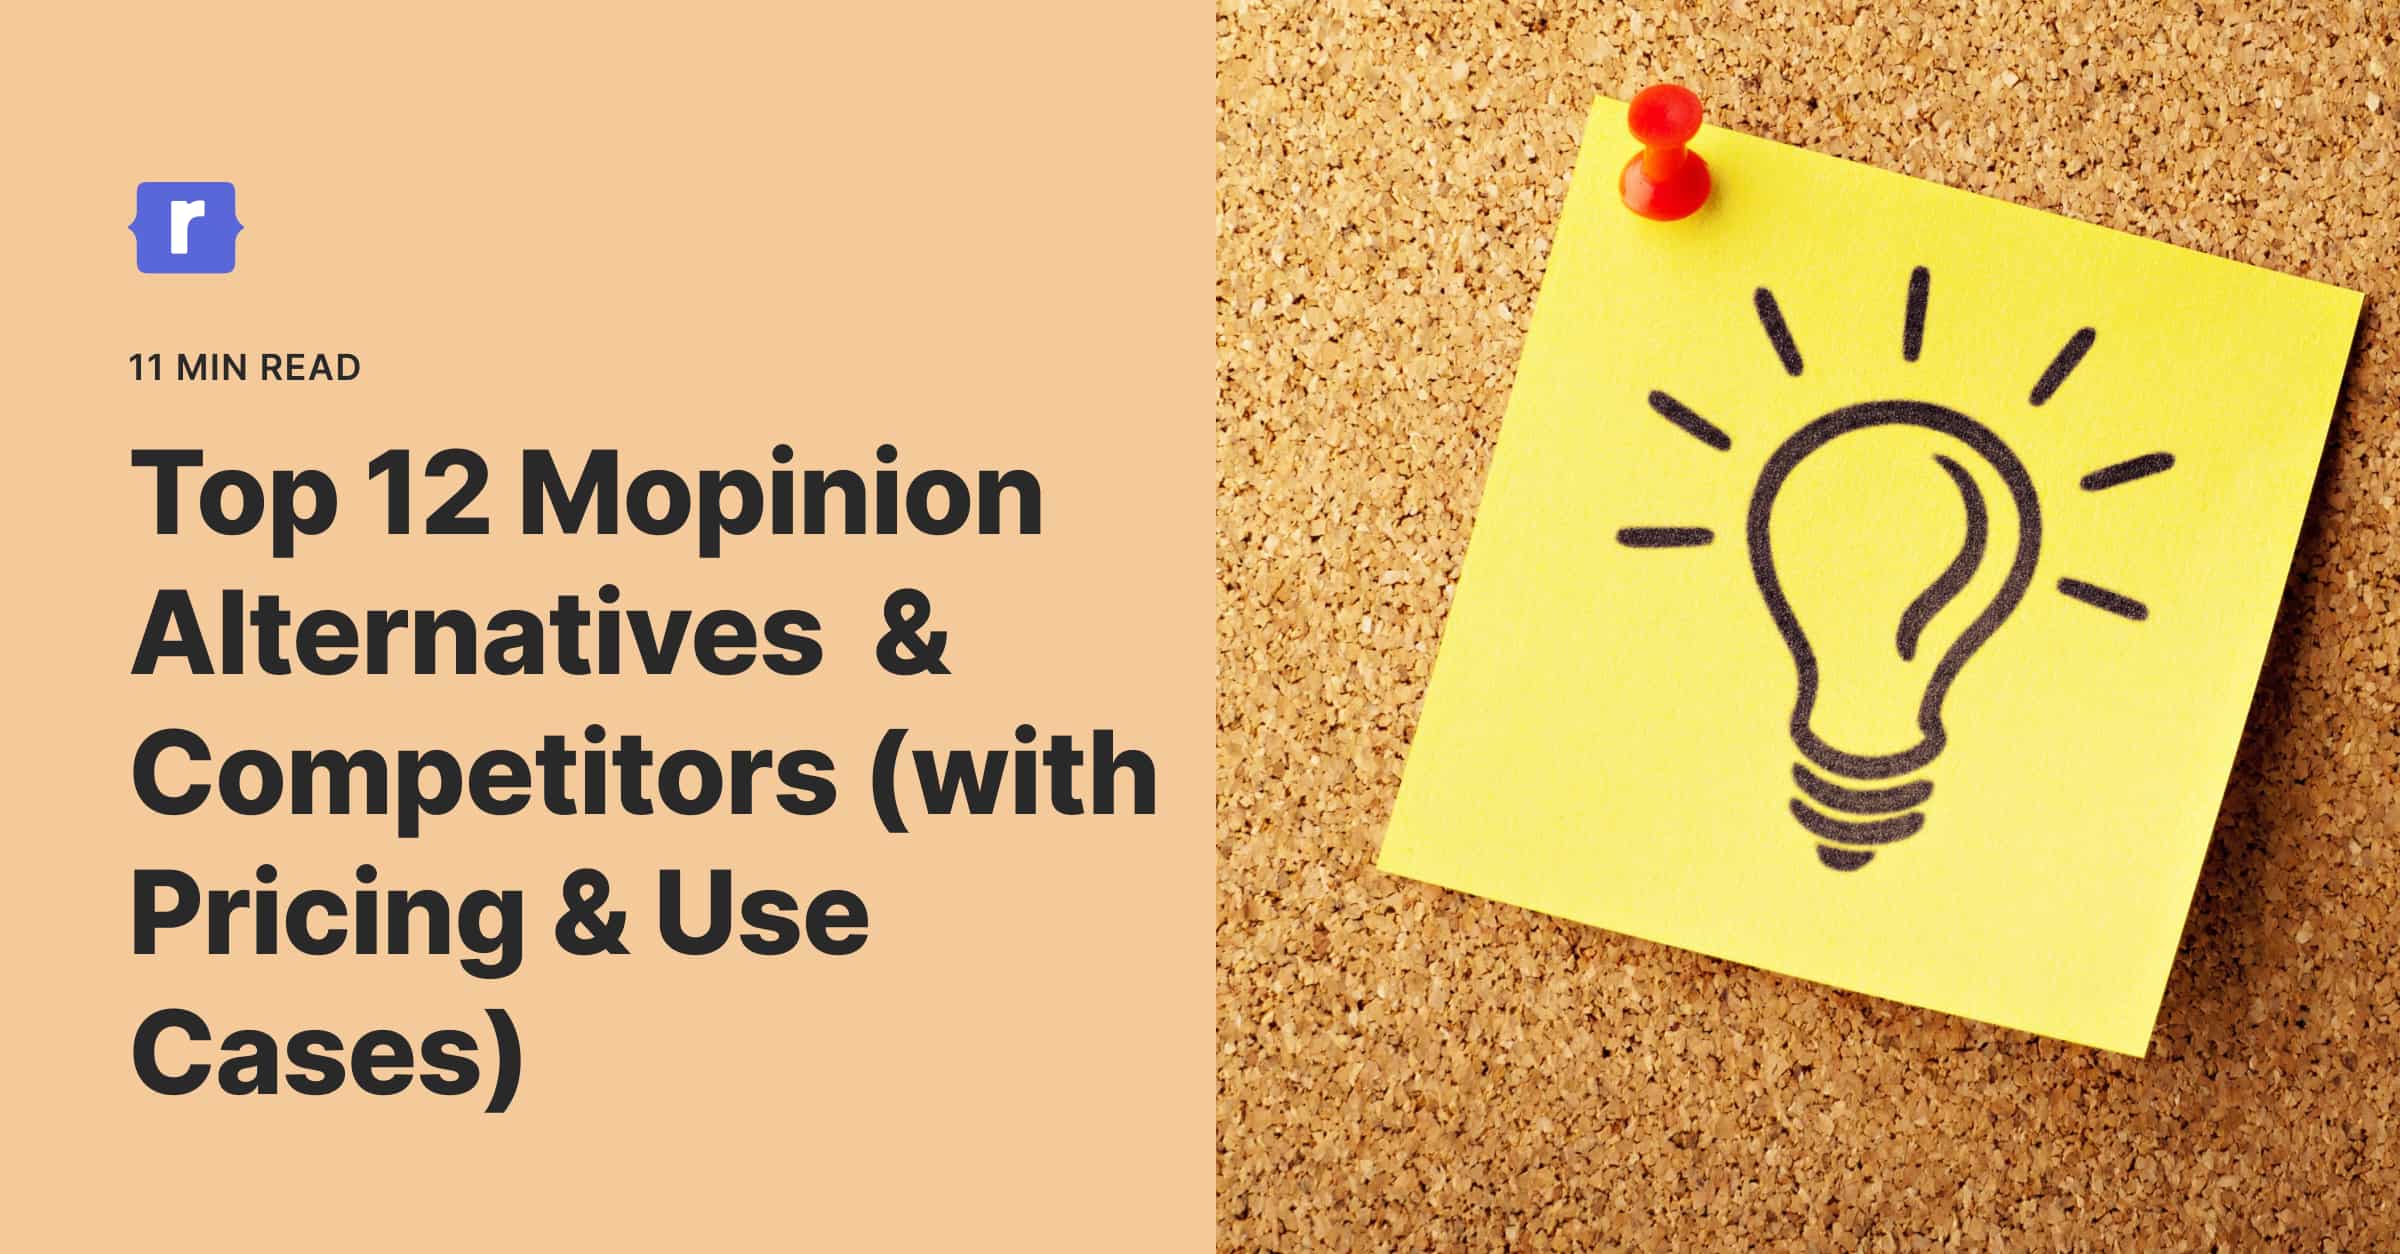 Top 12 Mopinion Alternatives & Competitors